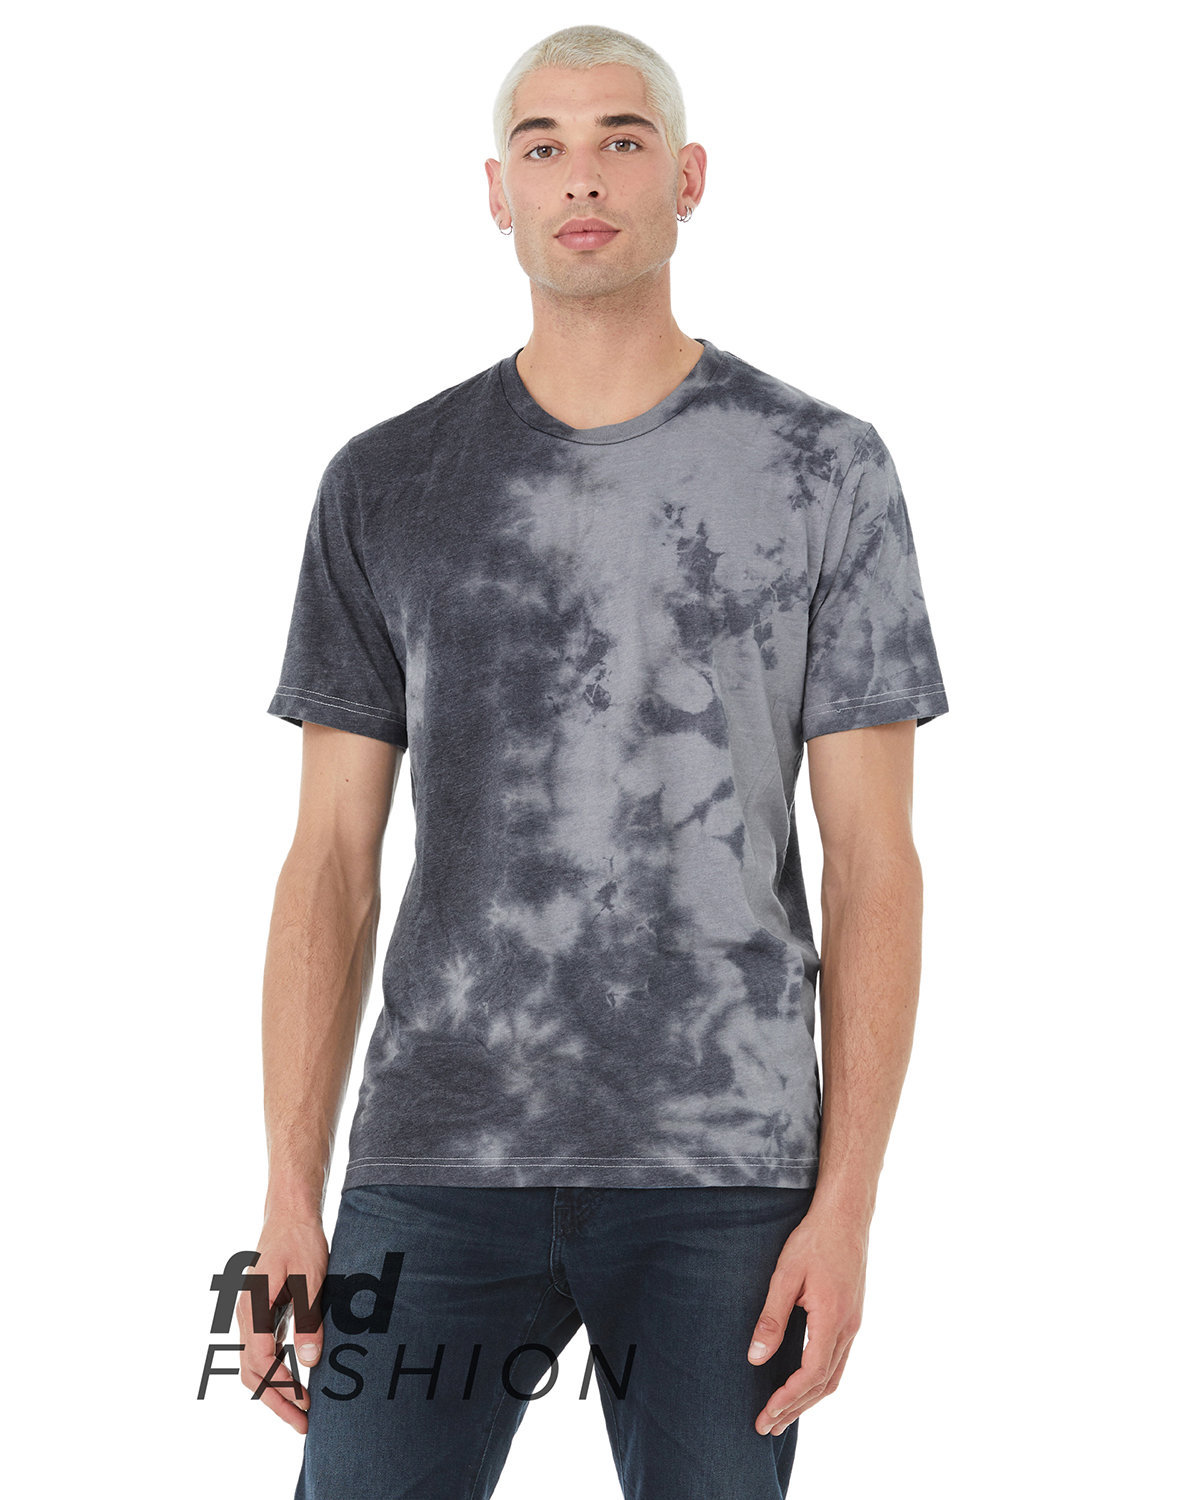 Tie Dye T-Shirt - Unisex Tie Dye T-Shirt Latest Price